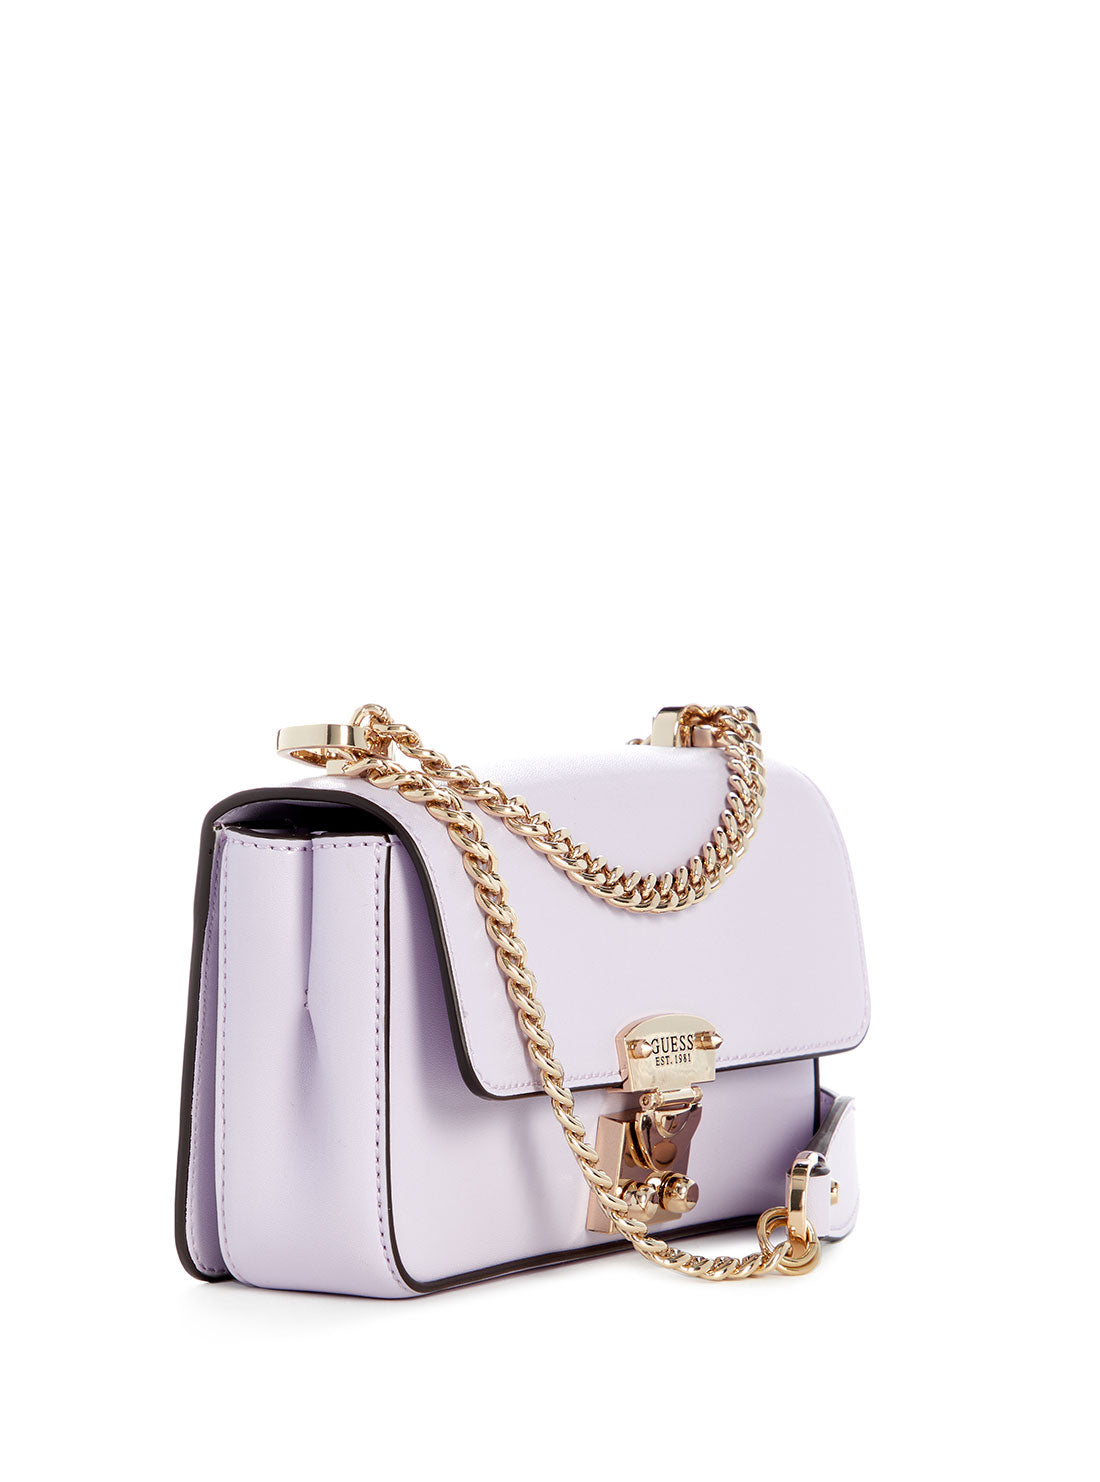 GUESS Lavender Eliette Mini Crossbody Bag side view